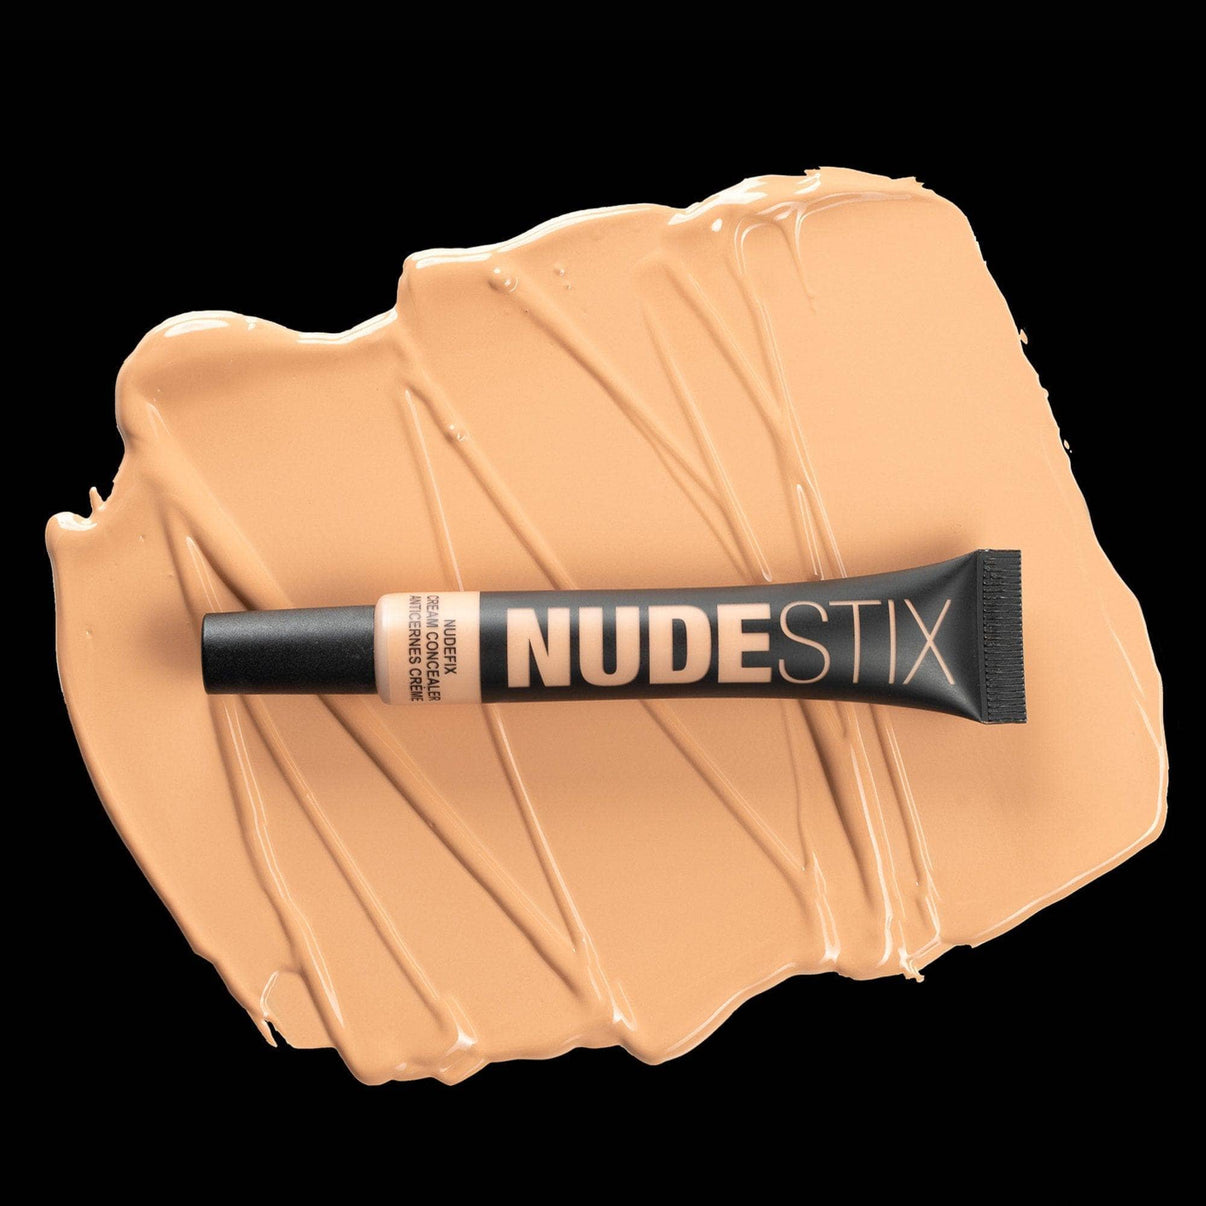 Nudefix cream concealer in shade nude 4.5 on top of texture swatch